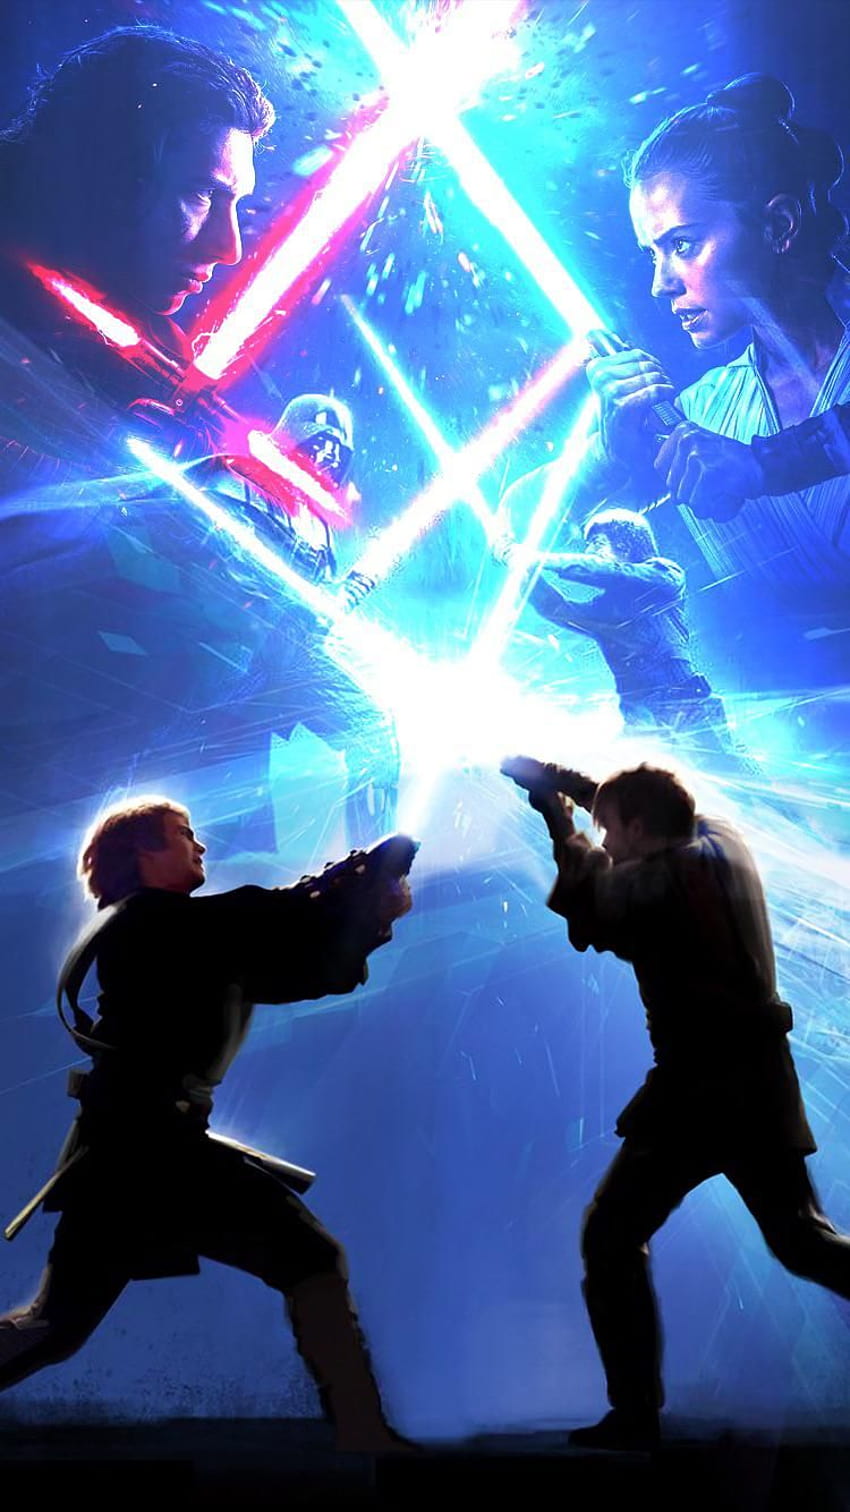 Consumed by Star Wars Feelings  ObiWan Kenobi vs Anakin Skywalker   illustrated